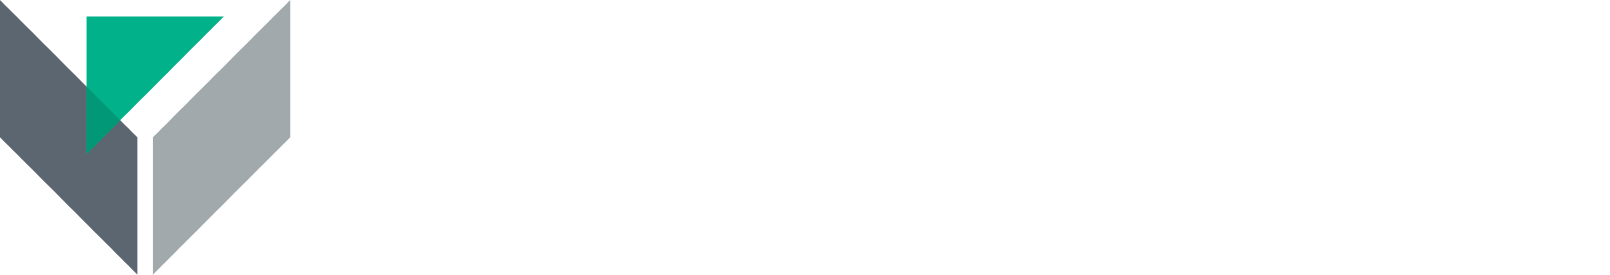 Quotient Technology
 logo large for dark backgrounds (transparent PNG)